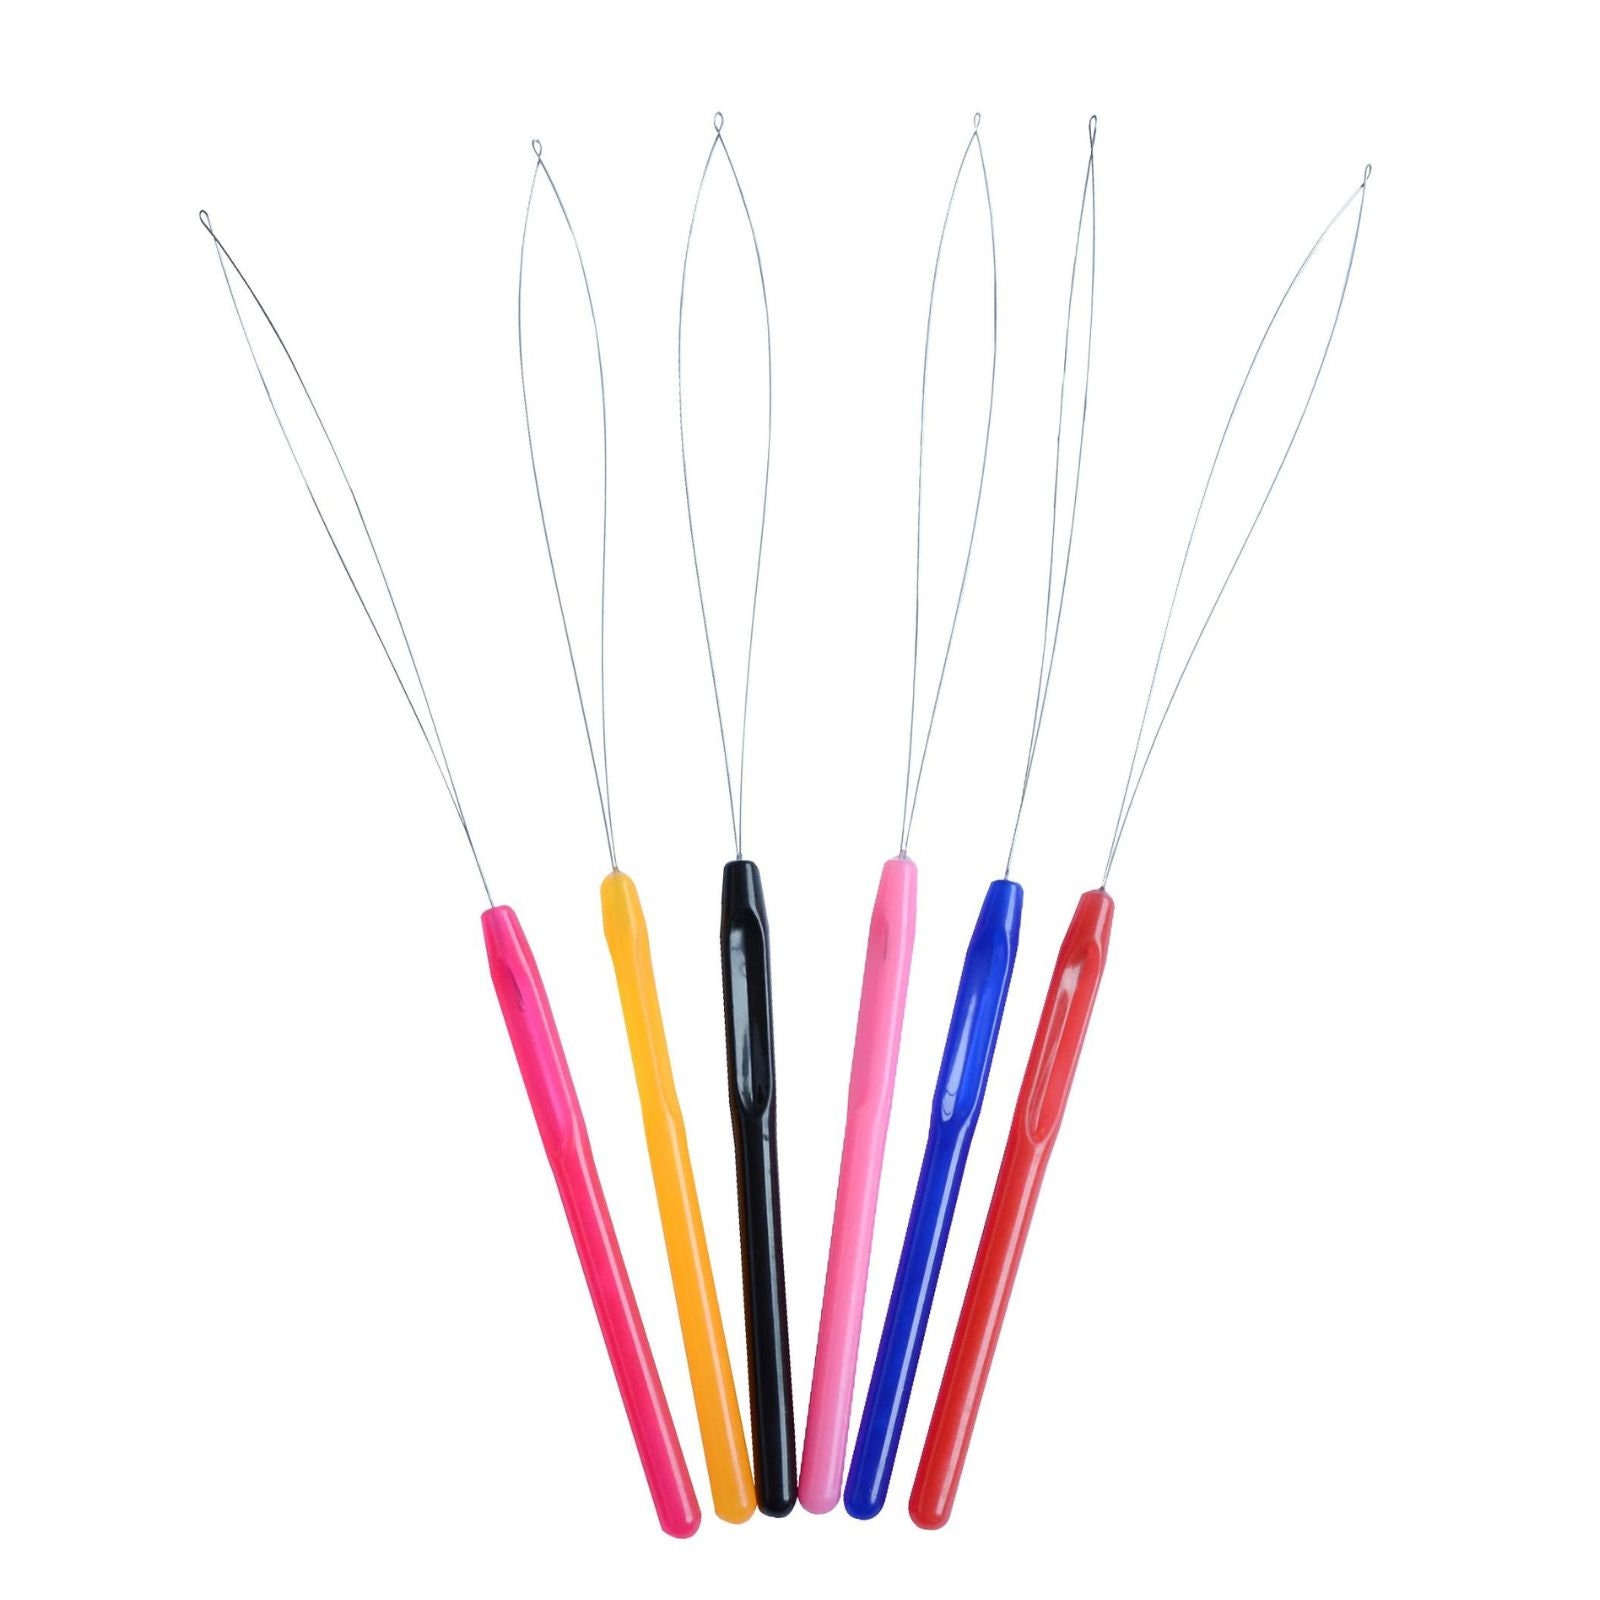 Buy 6 pcs Wood-like Hair Extension Loop Needle Threader Wire